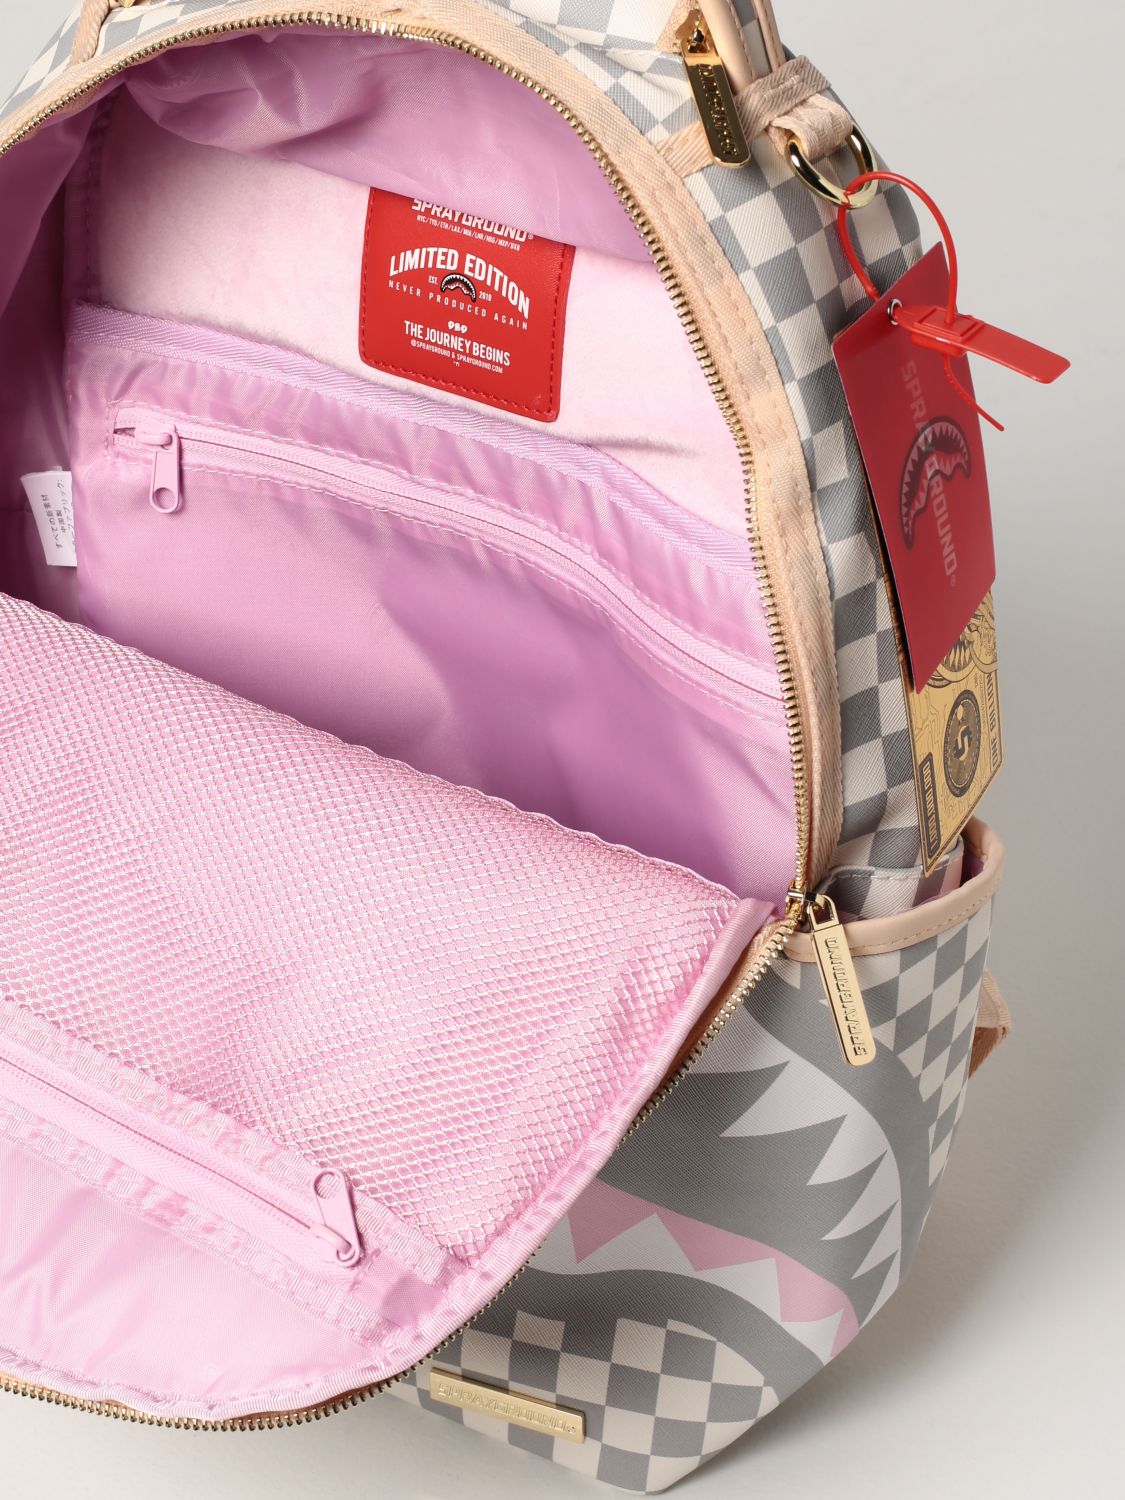 SPRAYGROUND: backpack in vegan leather with shark print - Fuchsia